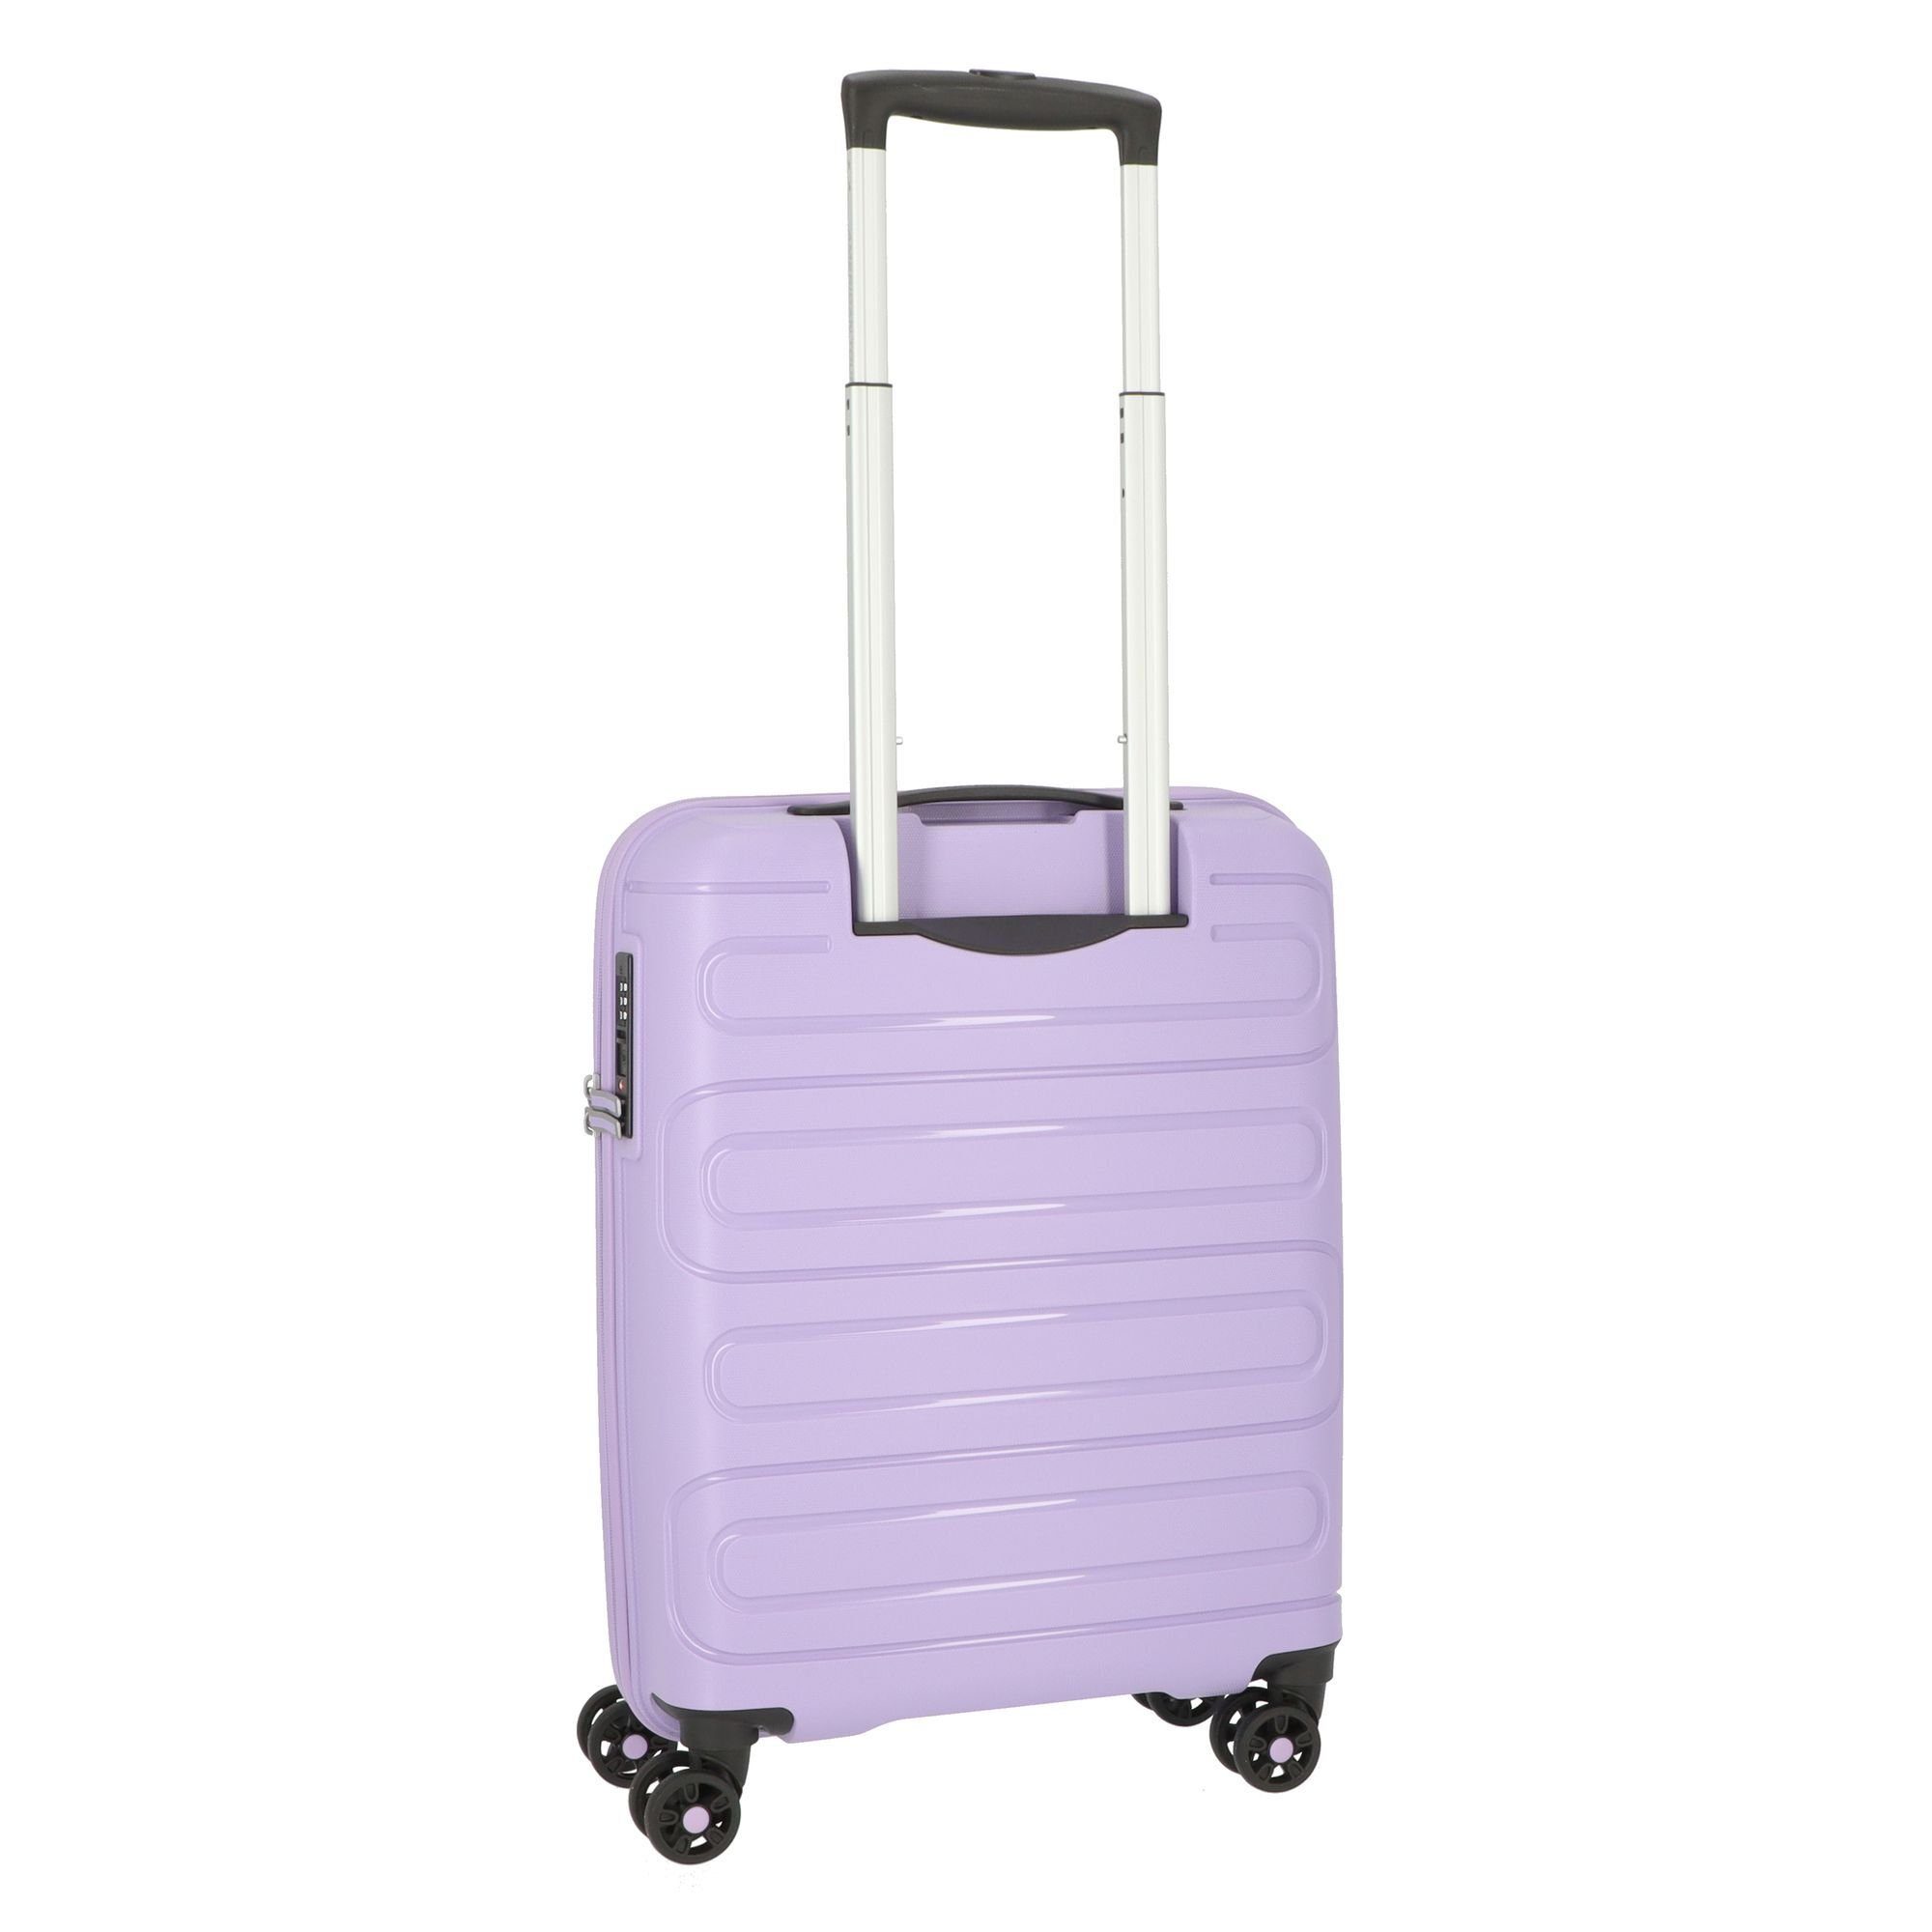 Handgepäck-Trolley 4 Tourister® Polypropylen purple lavender Rollen, Sunside, American